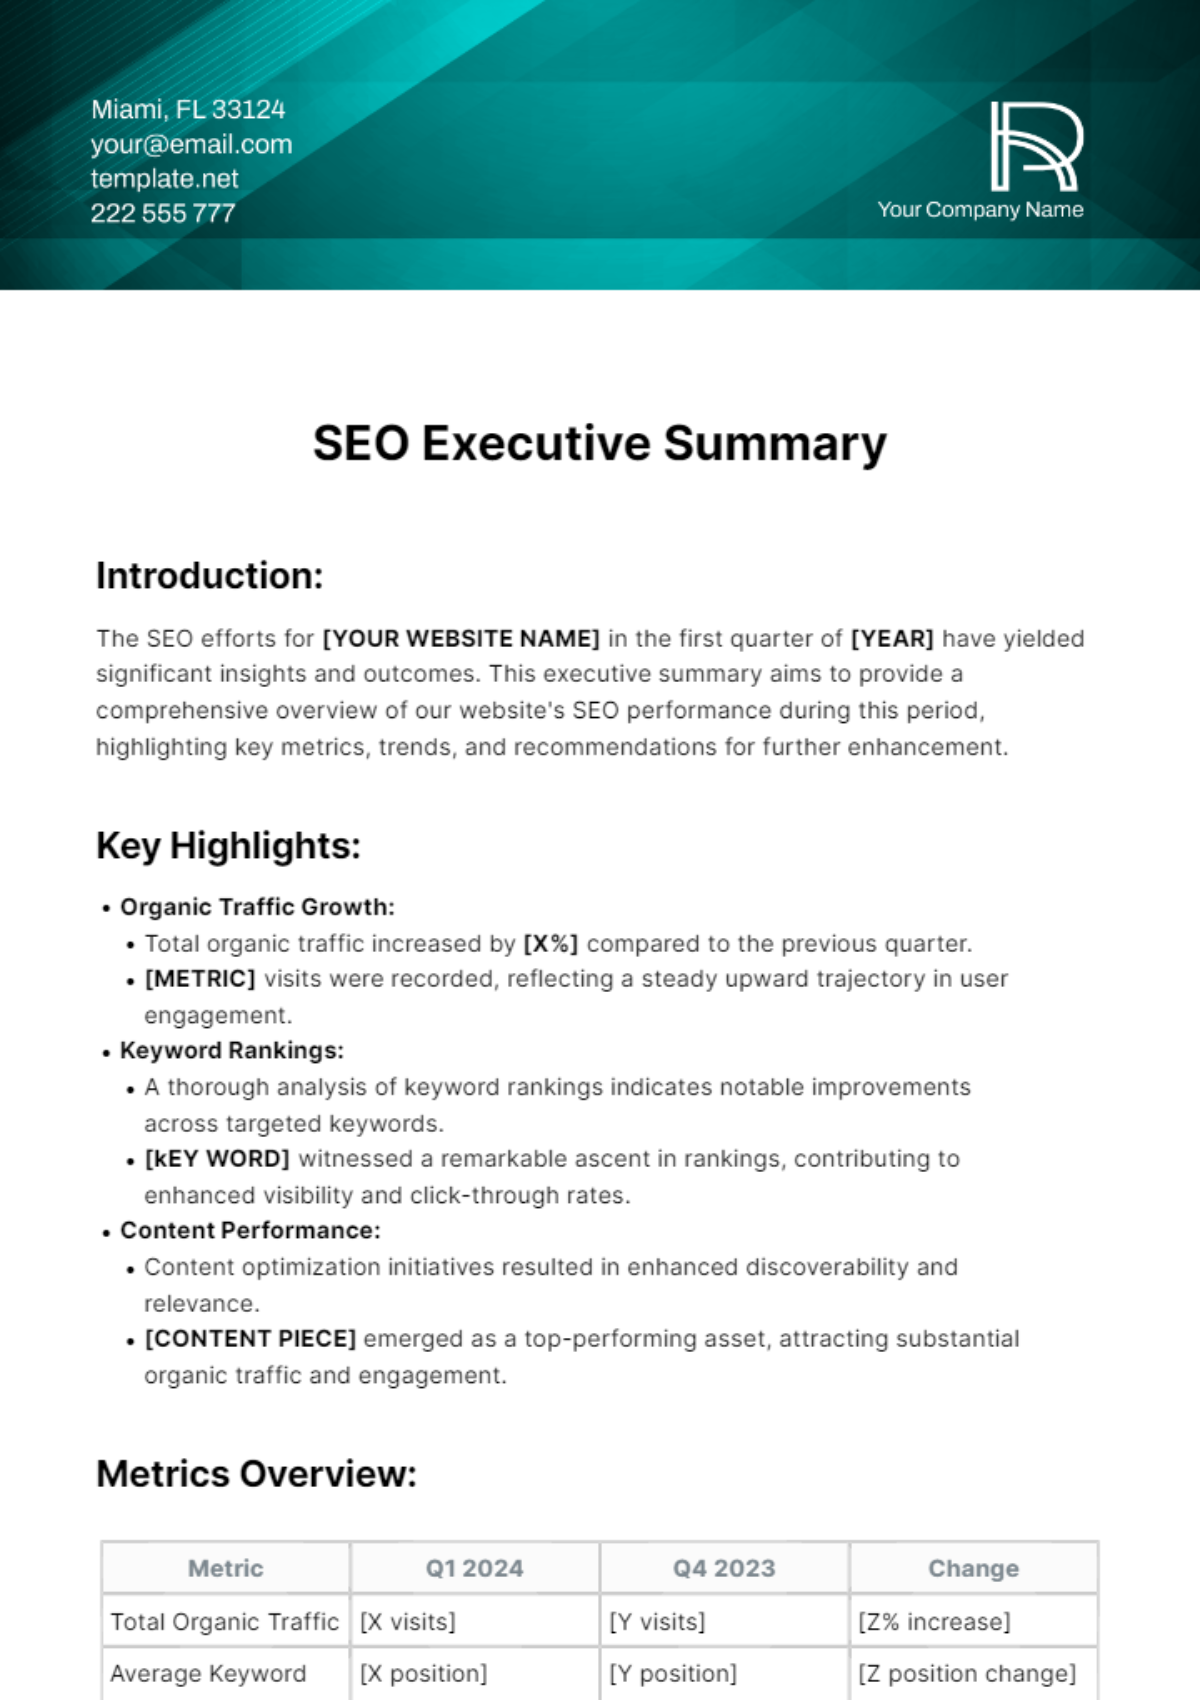 SEO Executive Summary Template